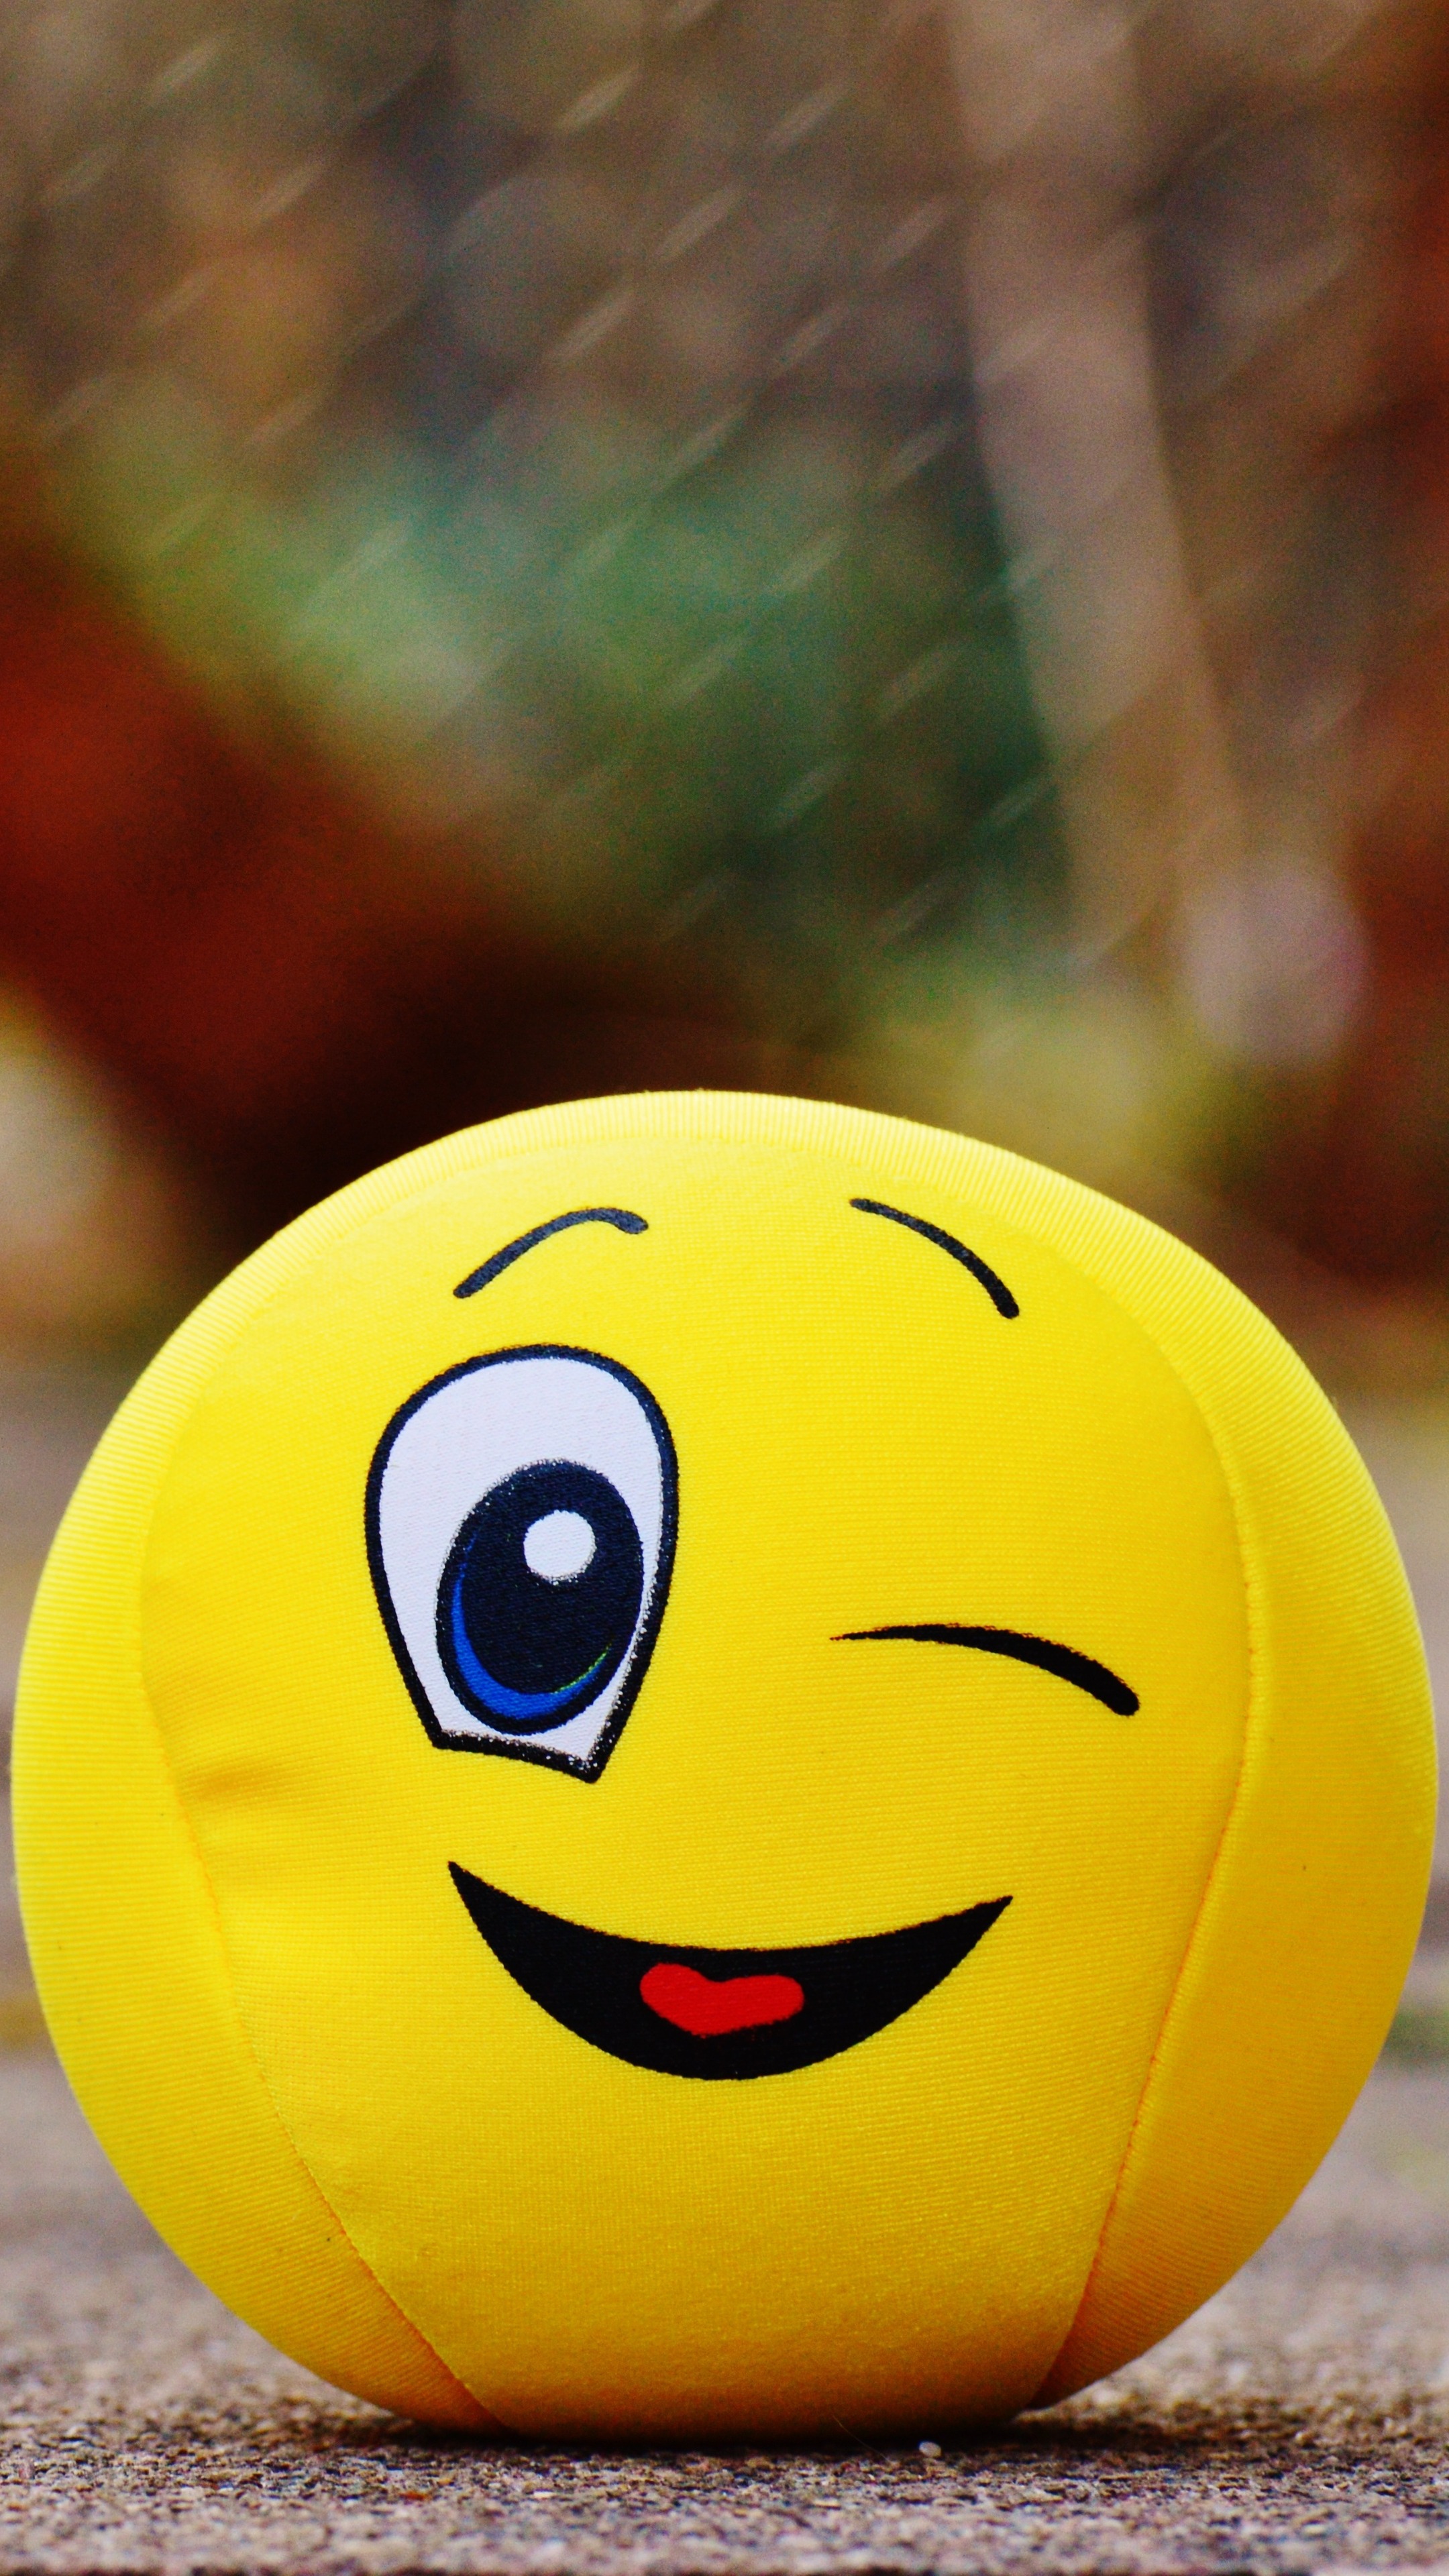 Wallpaper Ball Smile Happy Toy